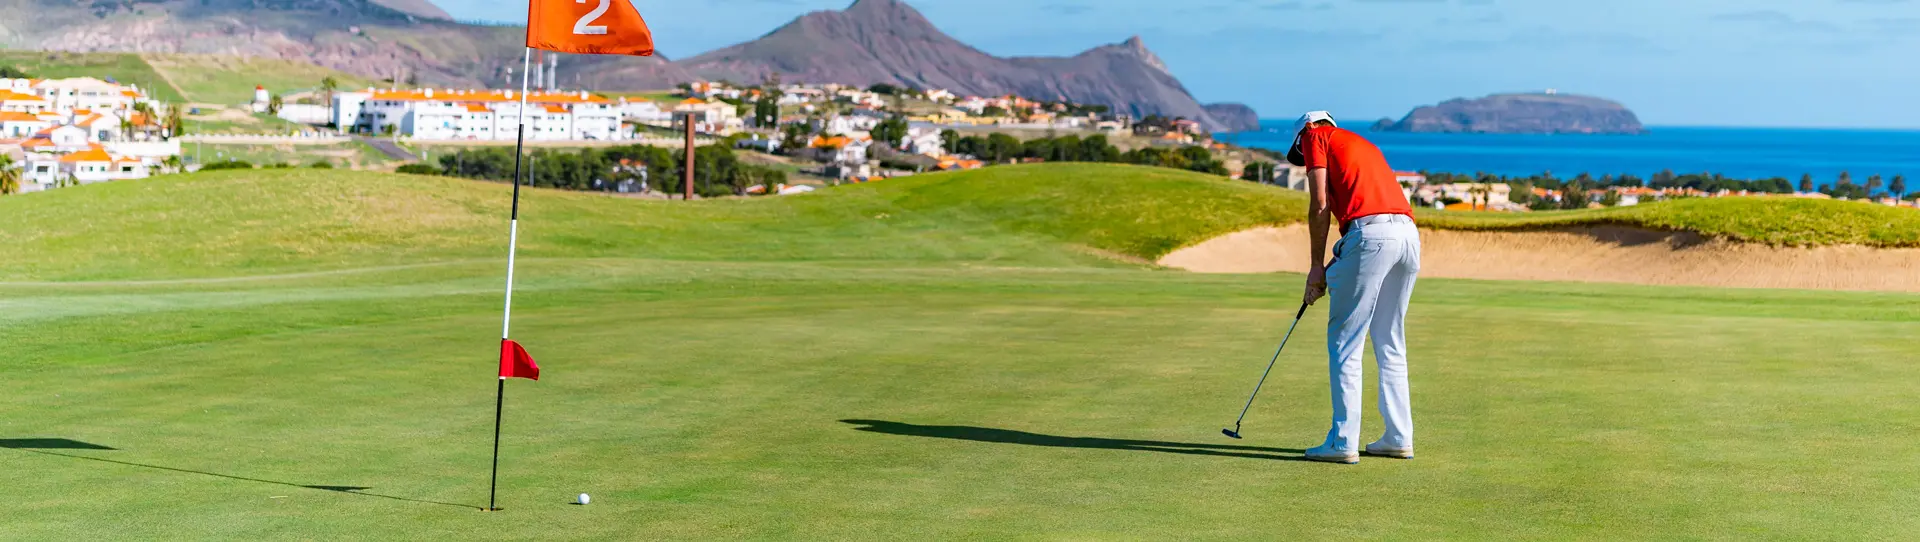 Portugal golf holidays - Madeira Golf Premium Passport 4 Rounds - Photo 1